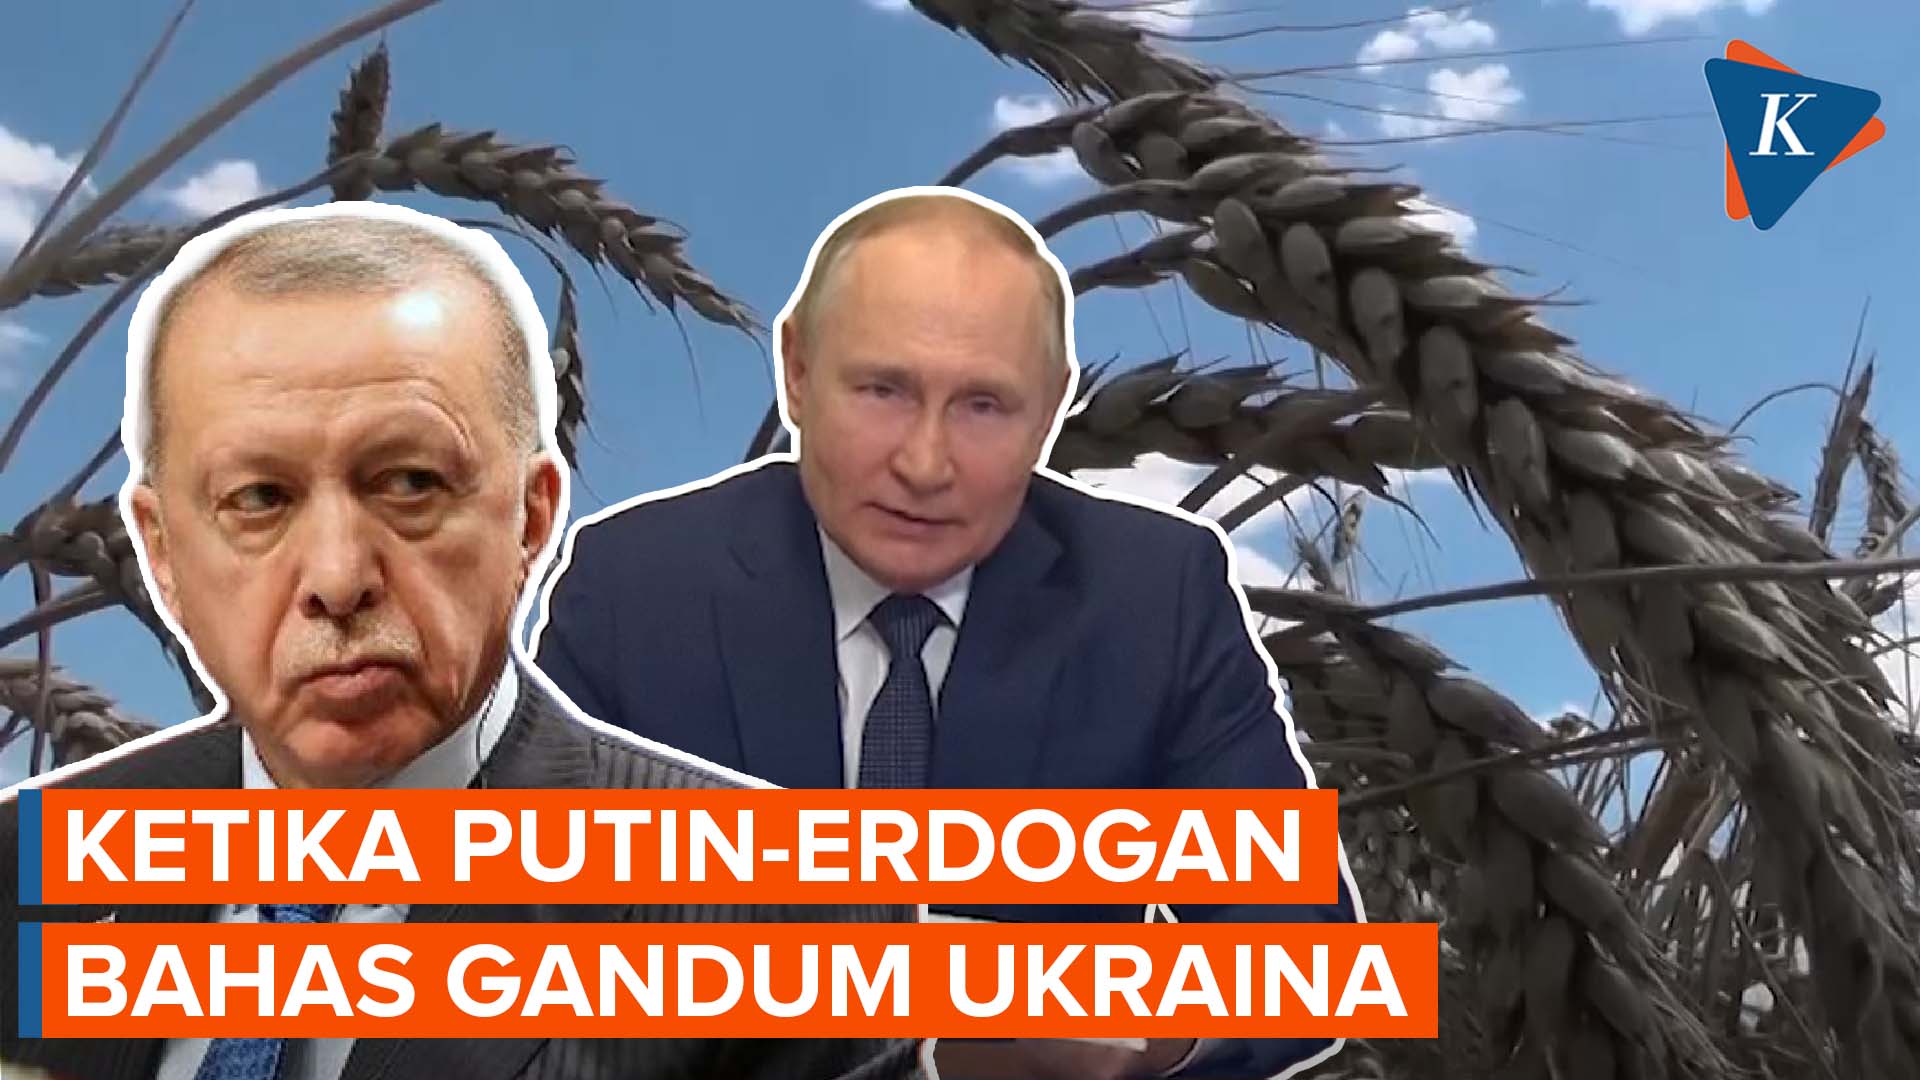 Bertemu Erdogan, Putin Bahas Ekspor Gandum Ukraina